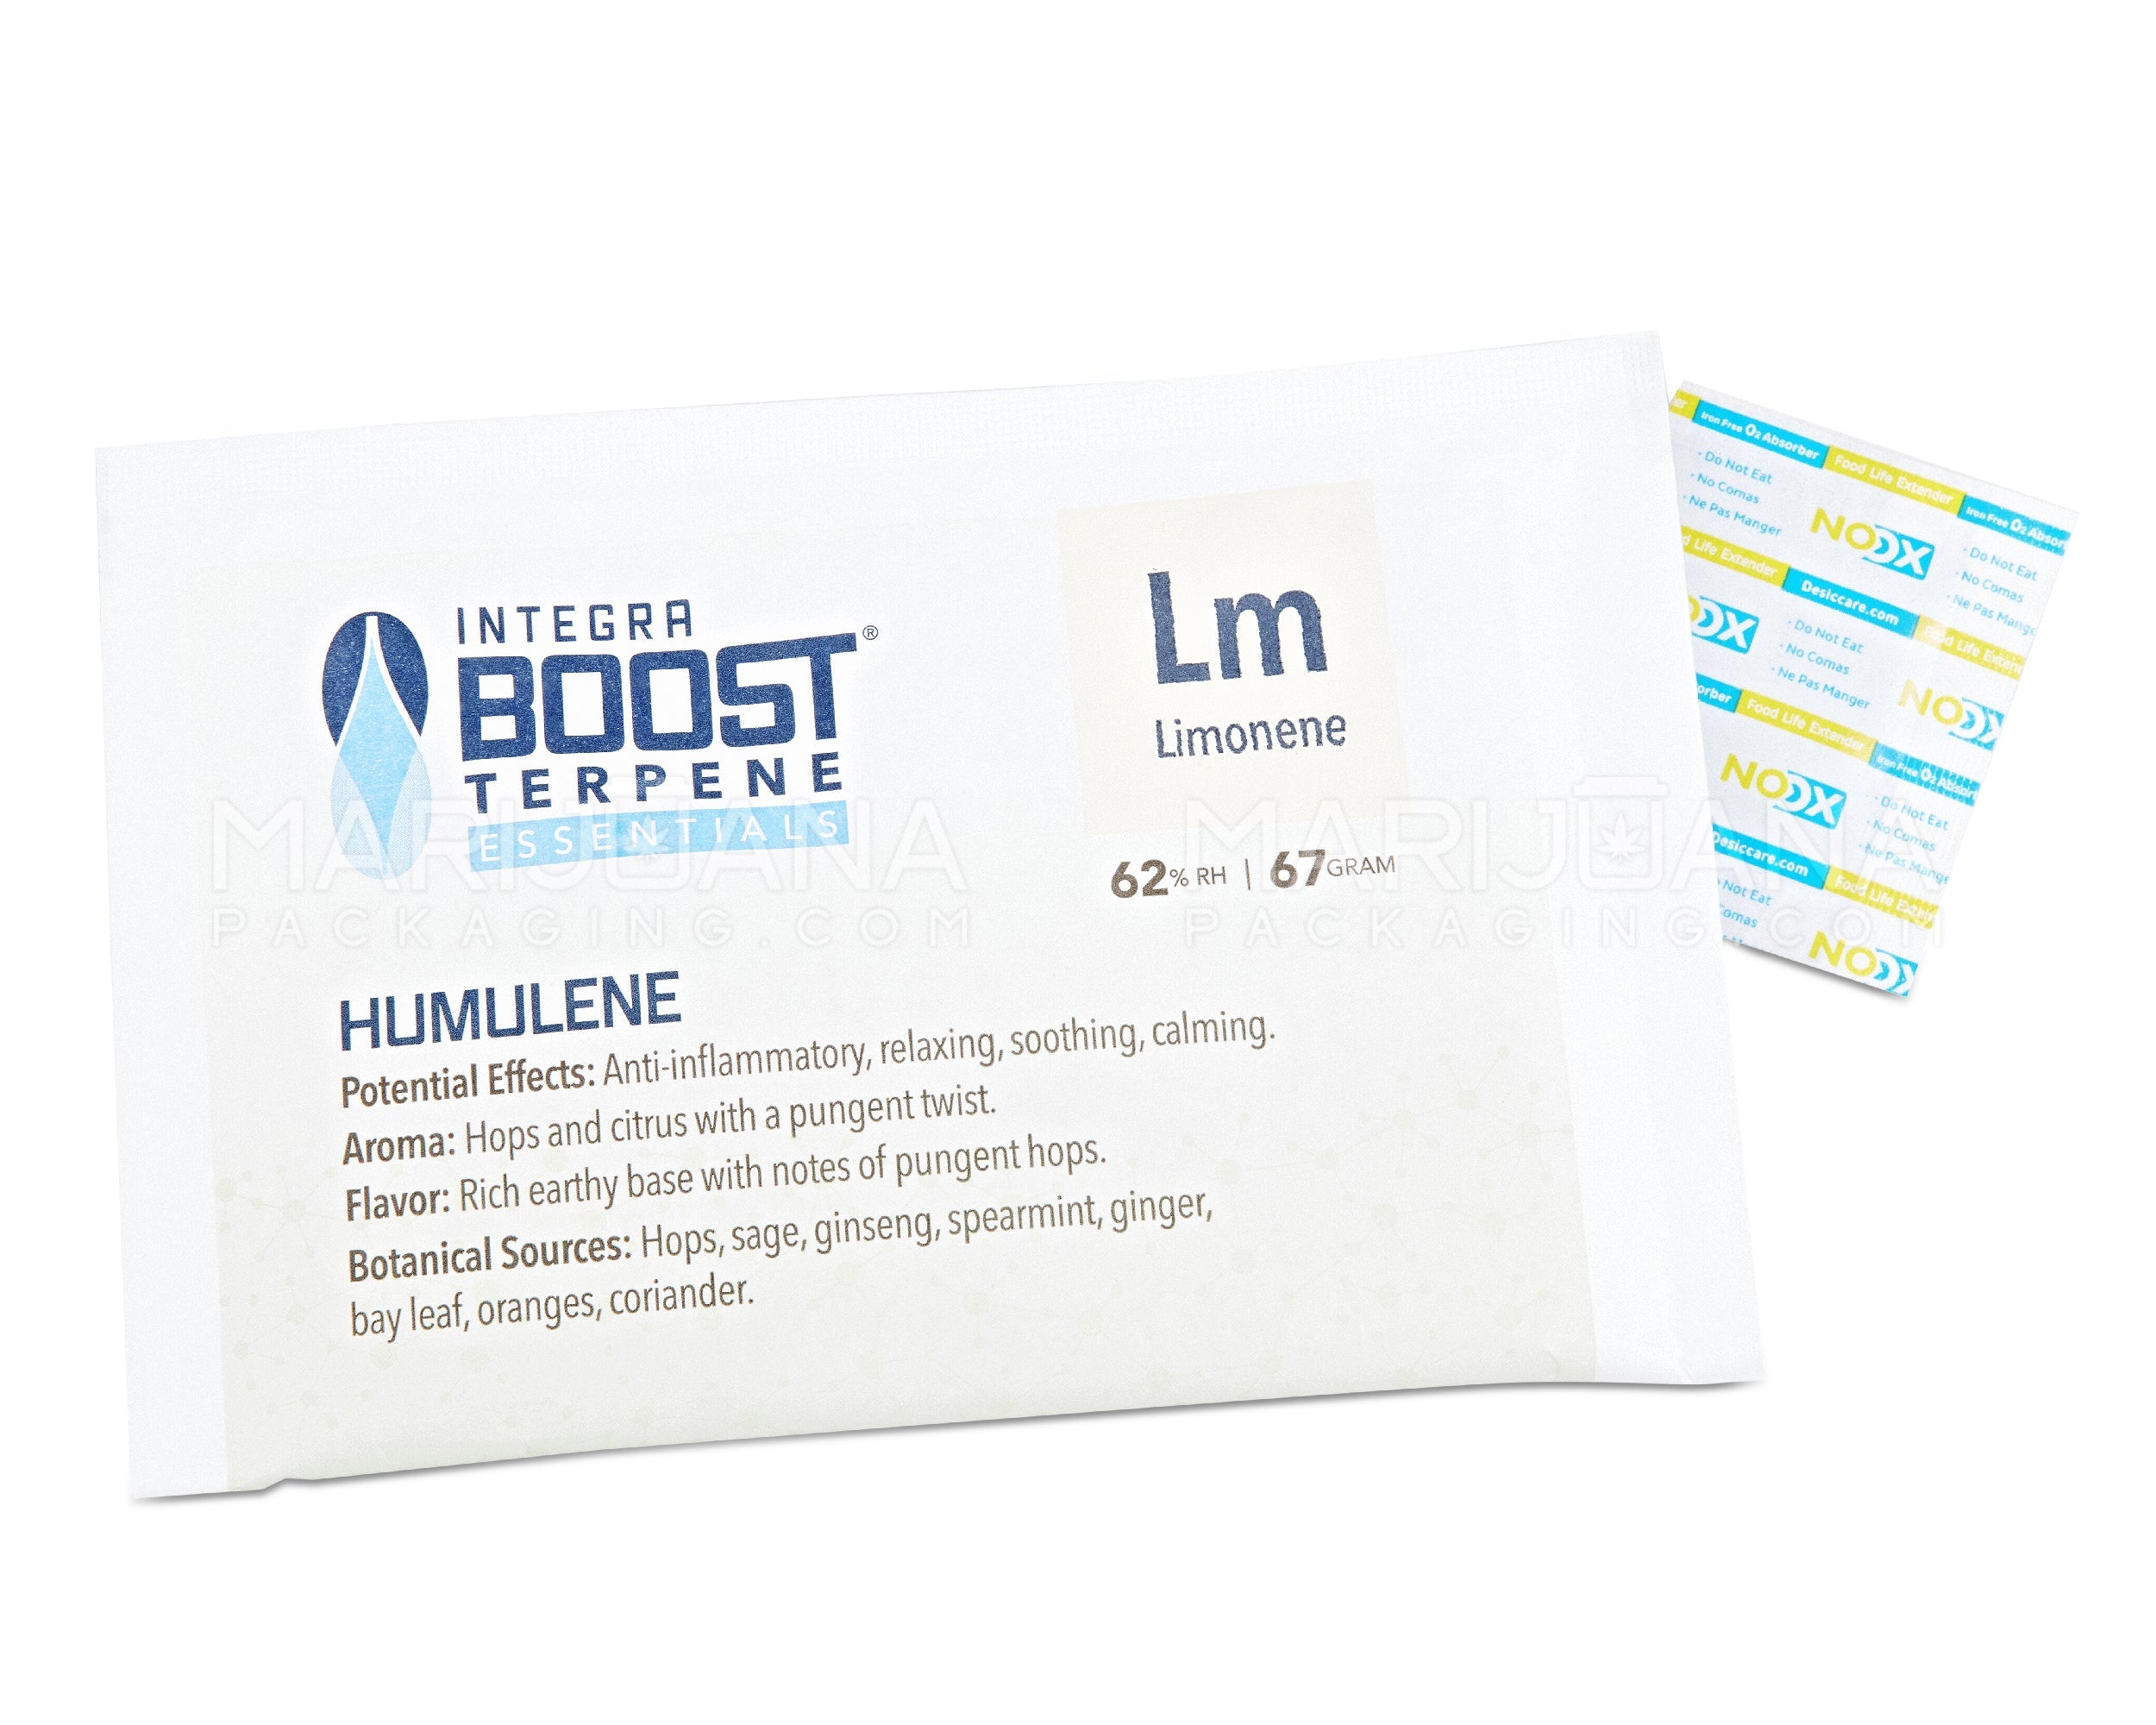 INTEGRA Boost Terpene Essentials Limonene Humidity Pack | 67 Grams - 62% | Sample - 3